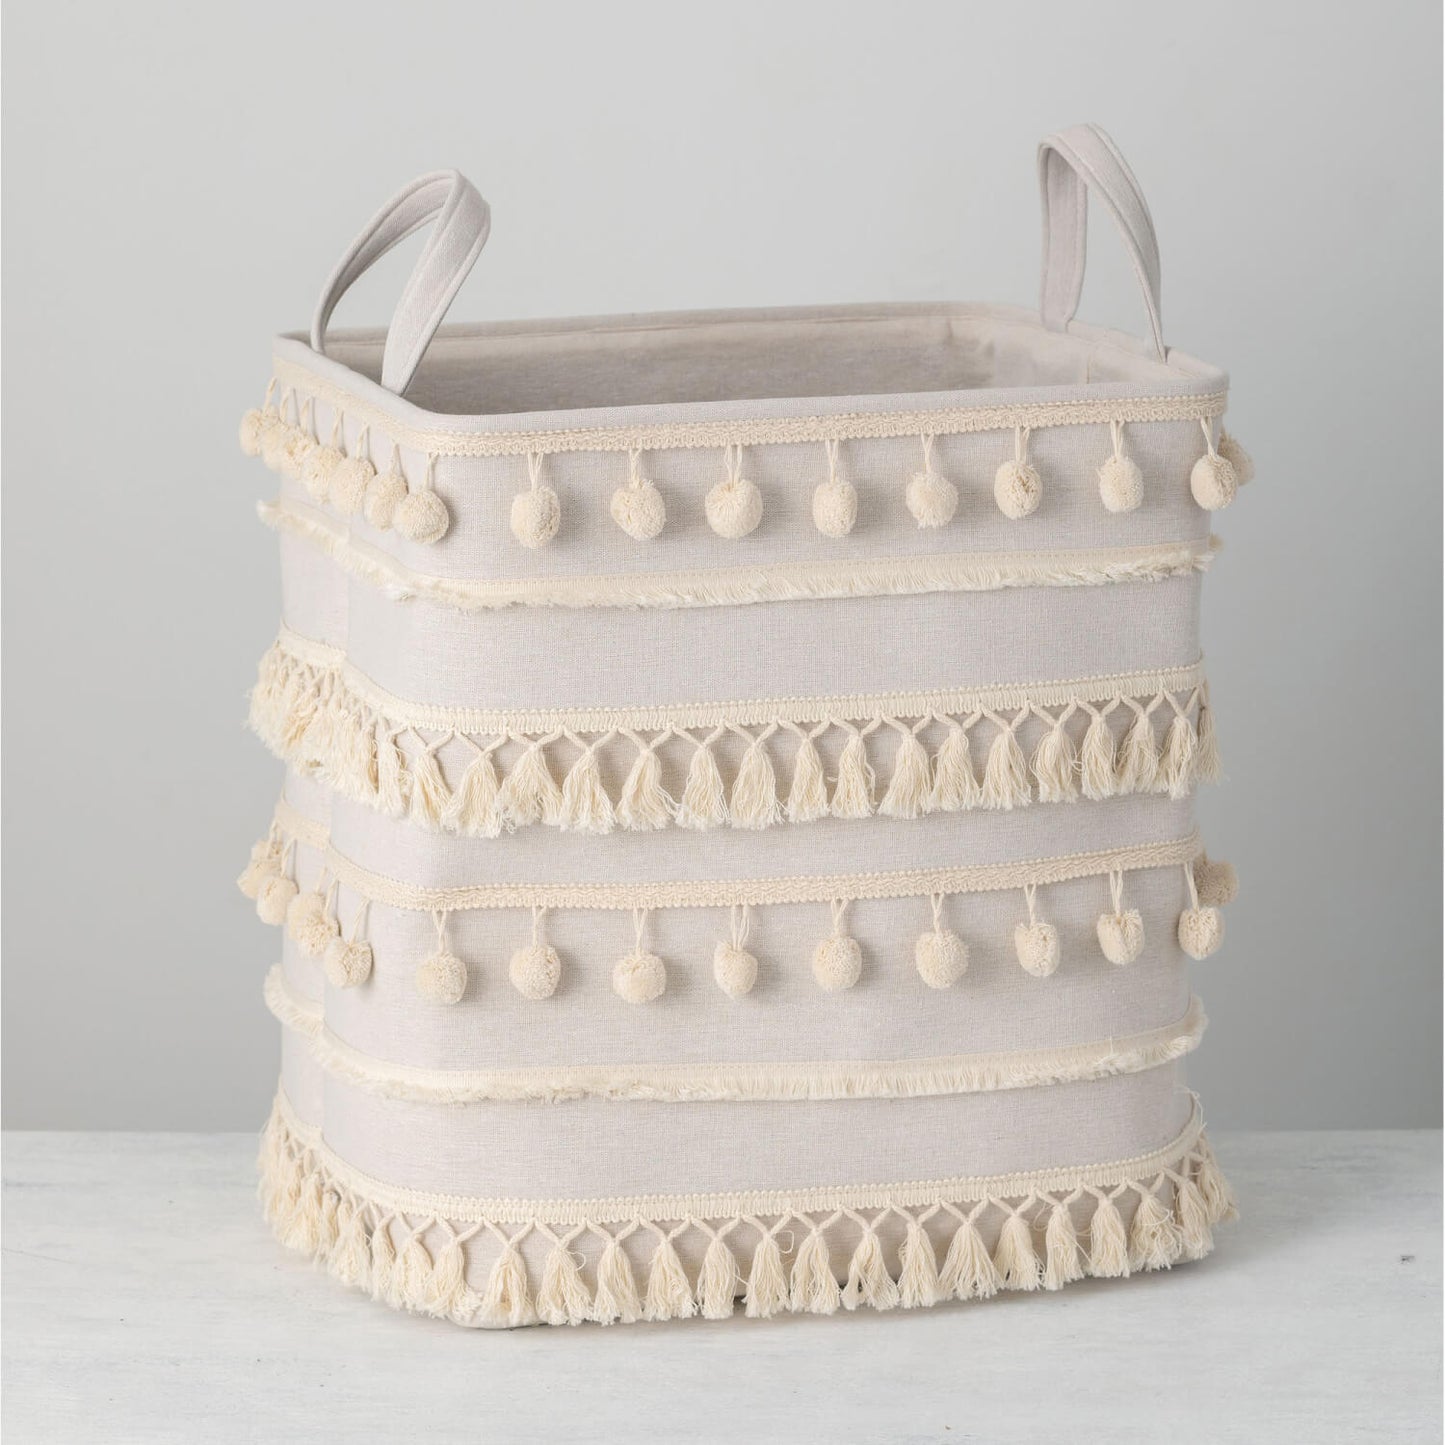 pom pom basket displayed on a white surface